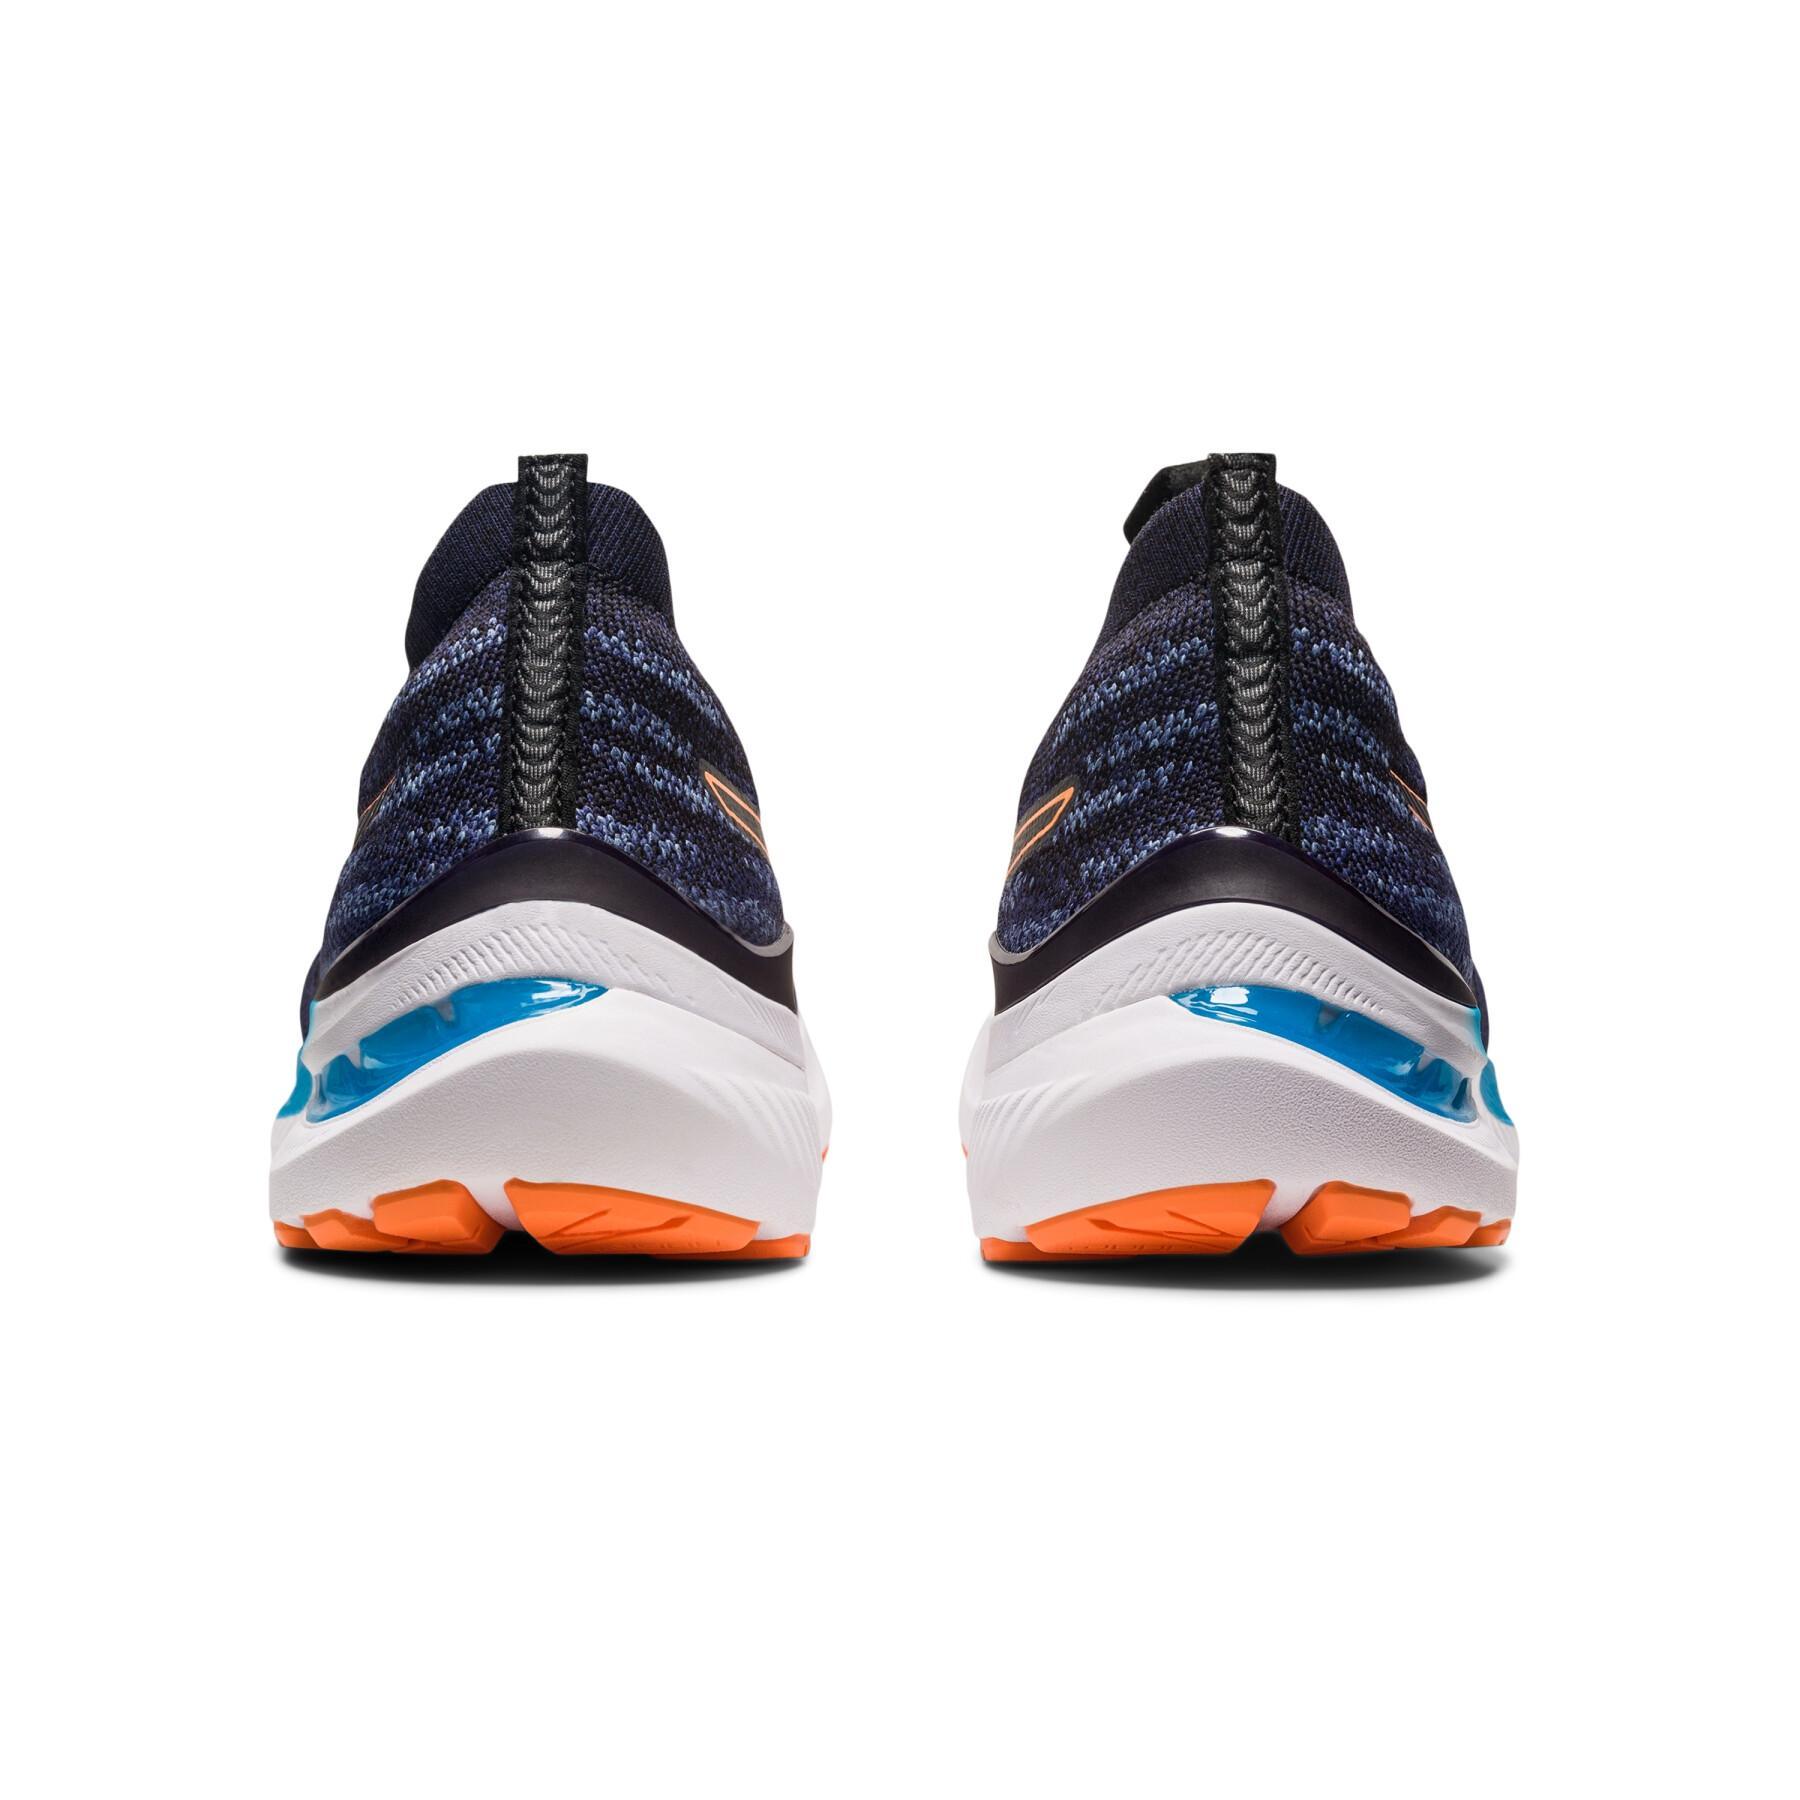 Sapatos de running Asics Gel-Kayano 29 - MK